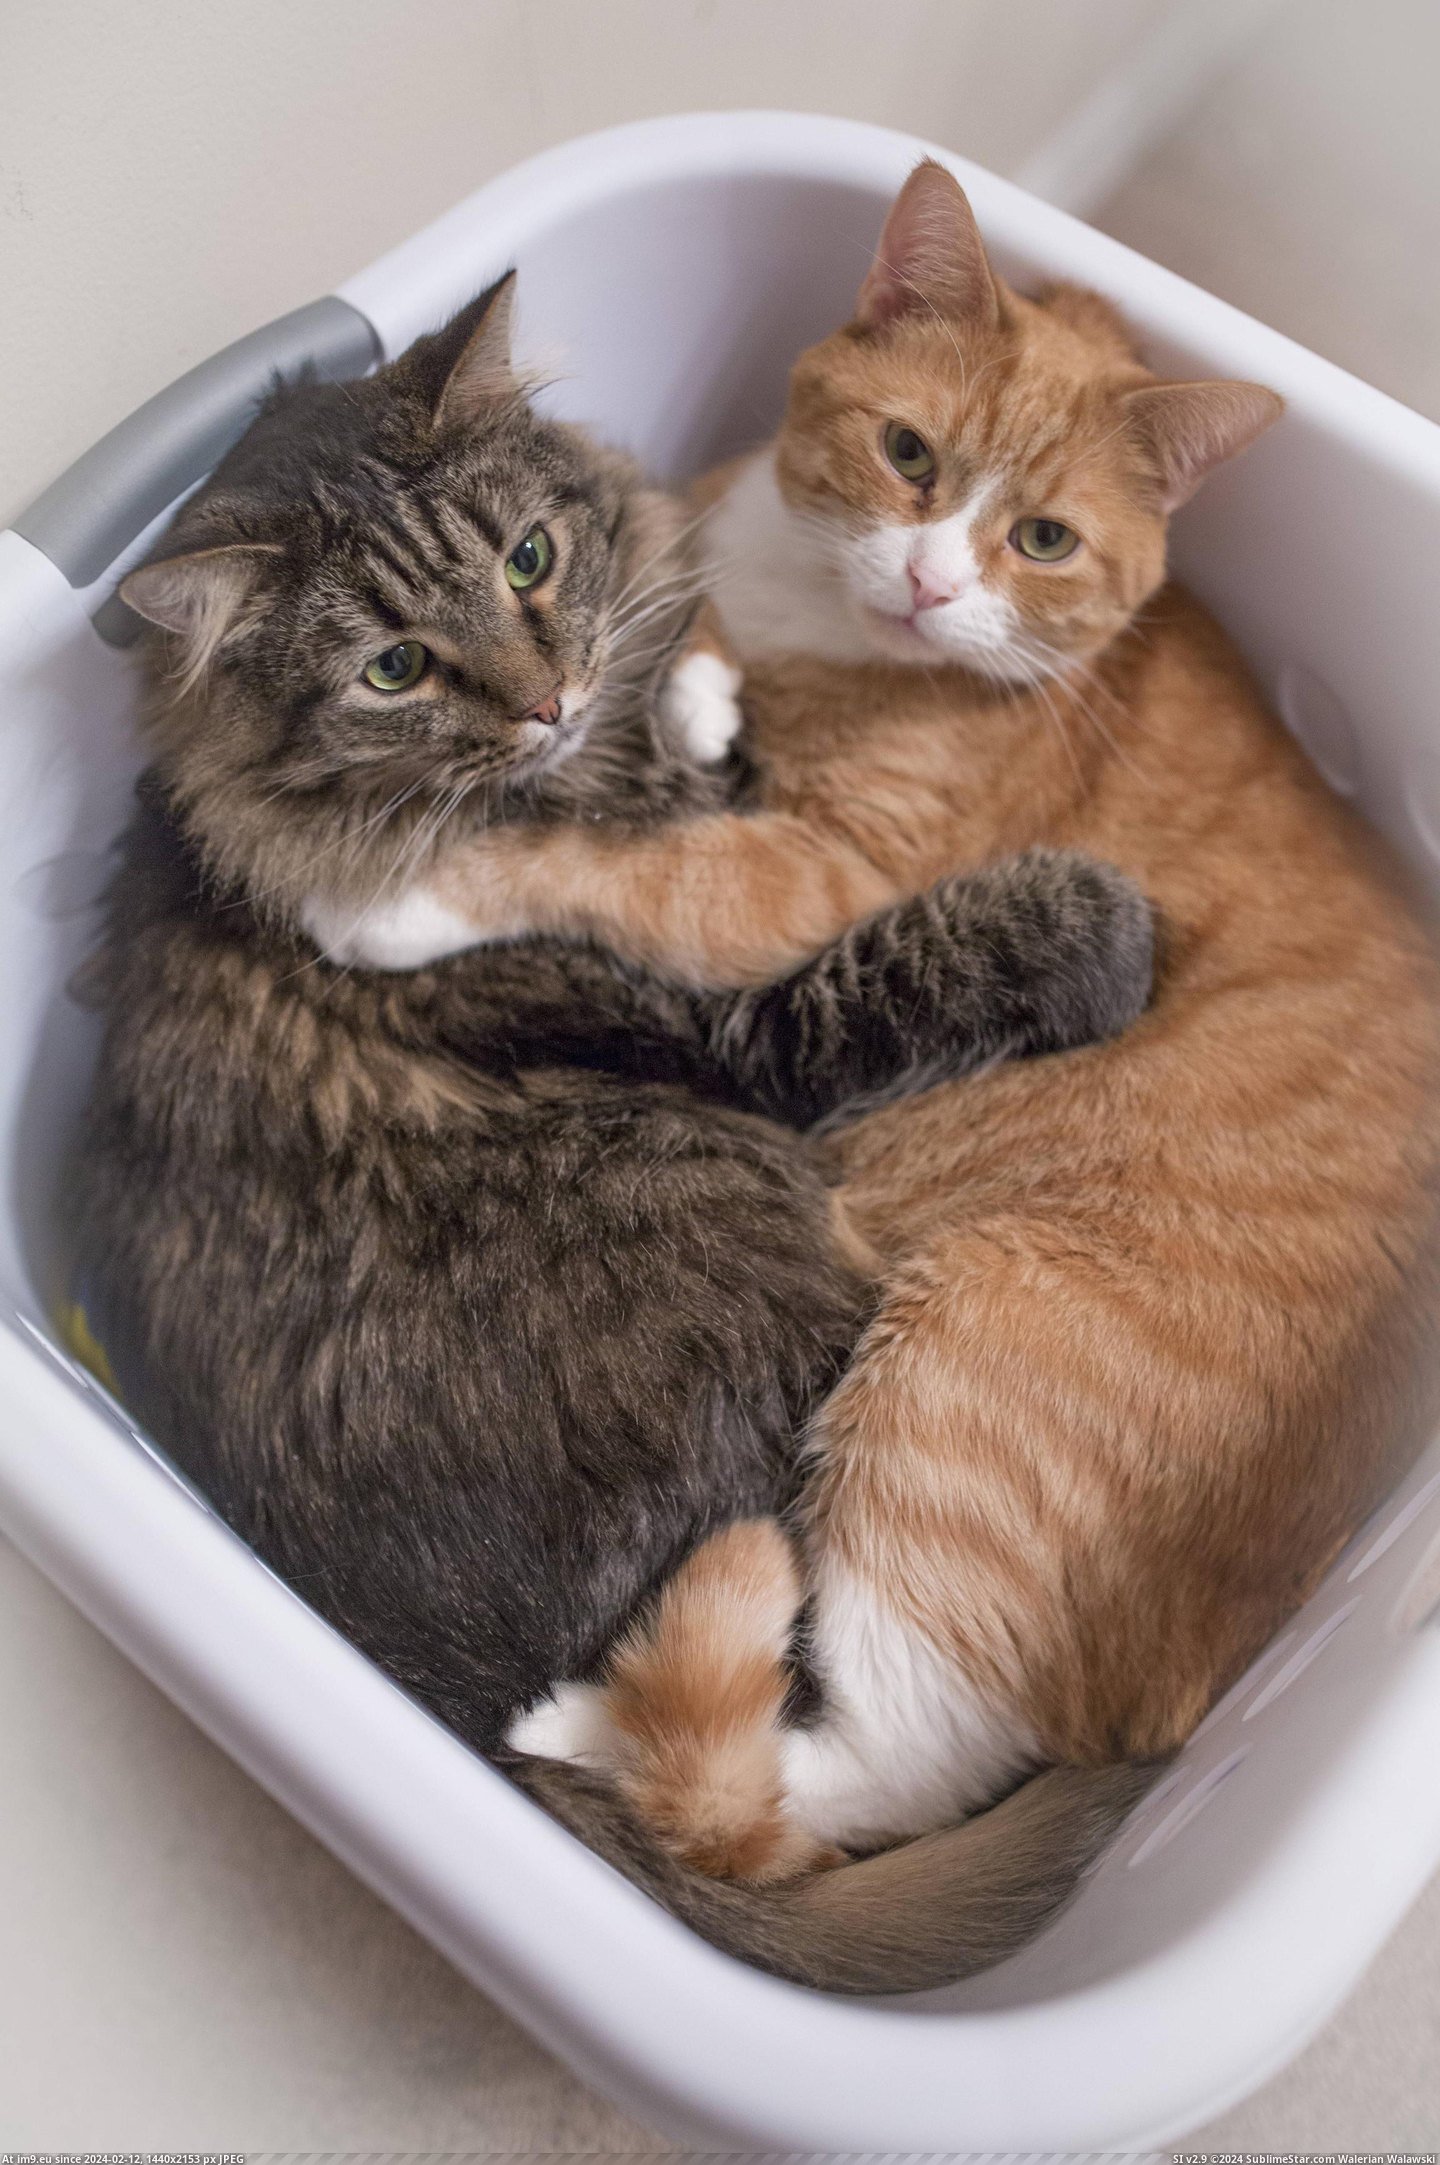 #Cats #Cuddling #Caught [Cats] Caught the cats cuddling Pic. (Изображение из альбом My r/CATS favs))